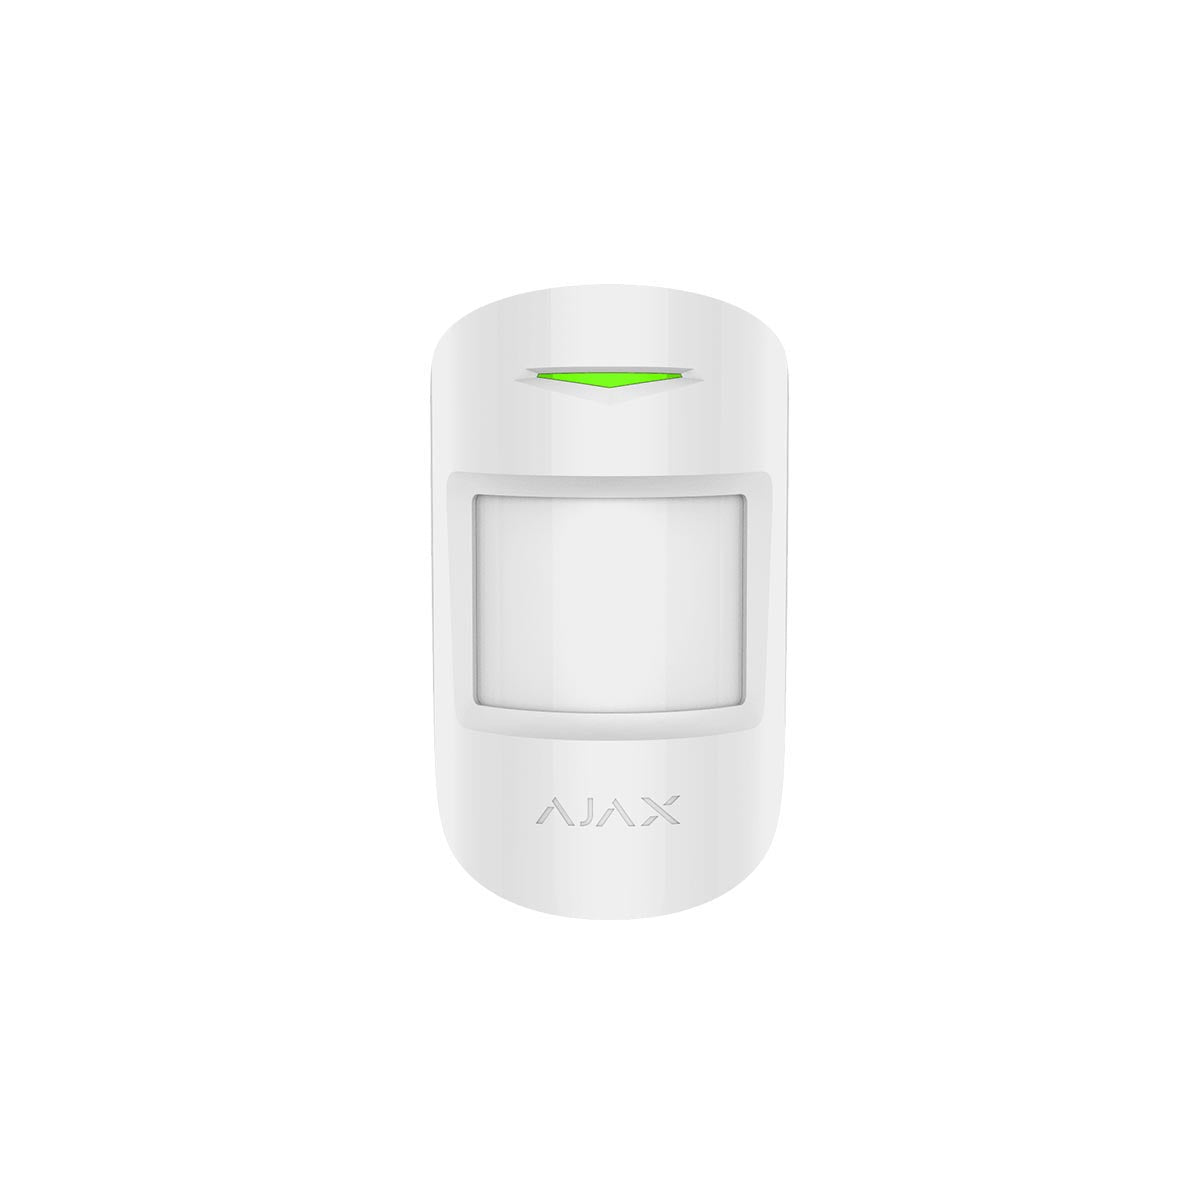 Ajax Hub 2 Plus Kit MotionProtect View AJHUIB2PLUSKIT1-500